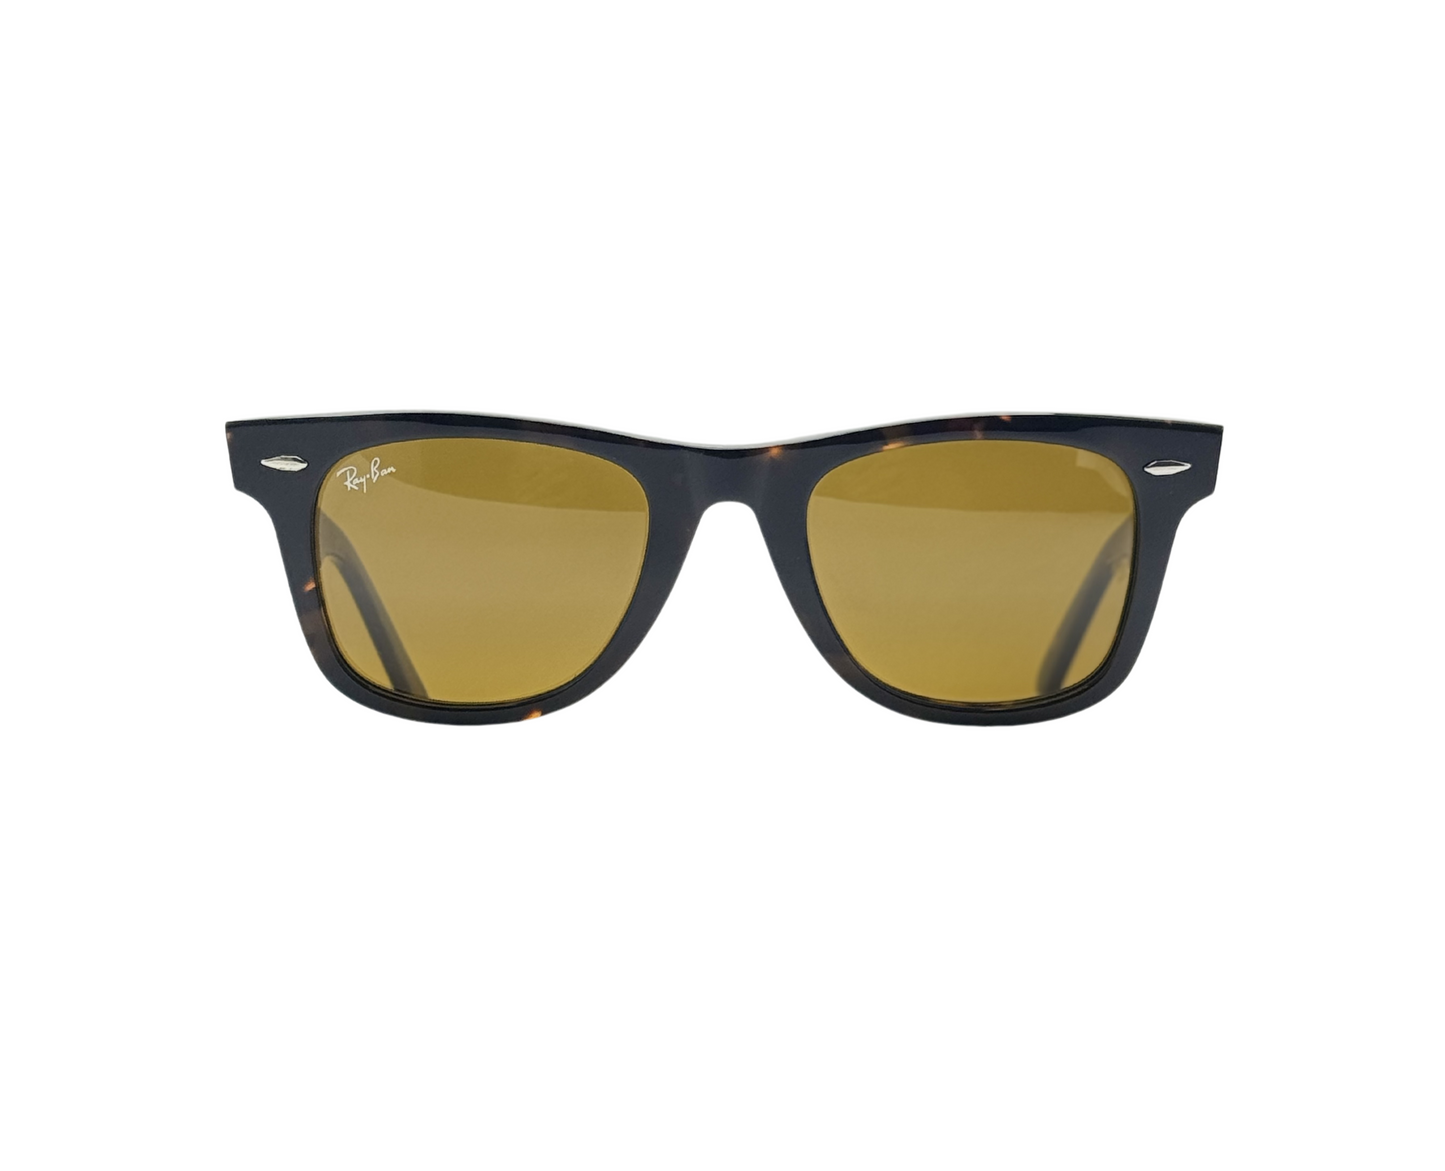 NS Luxury - 2140 - 902 - Wayfarer - Sunglasses